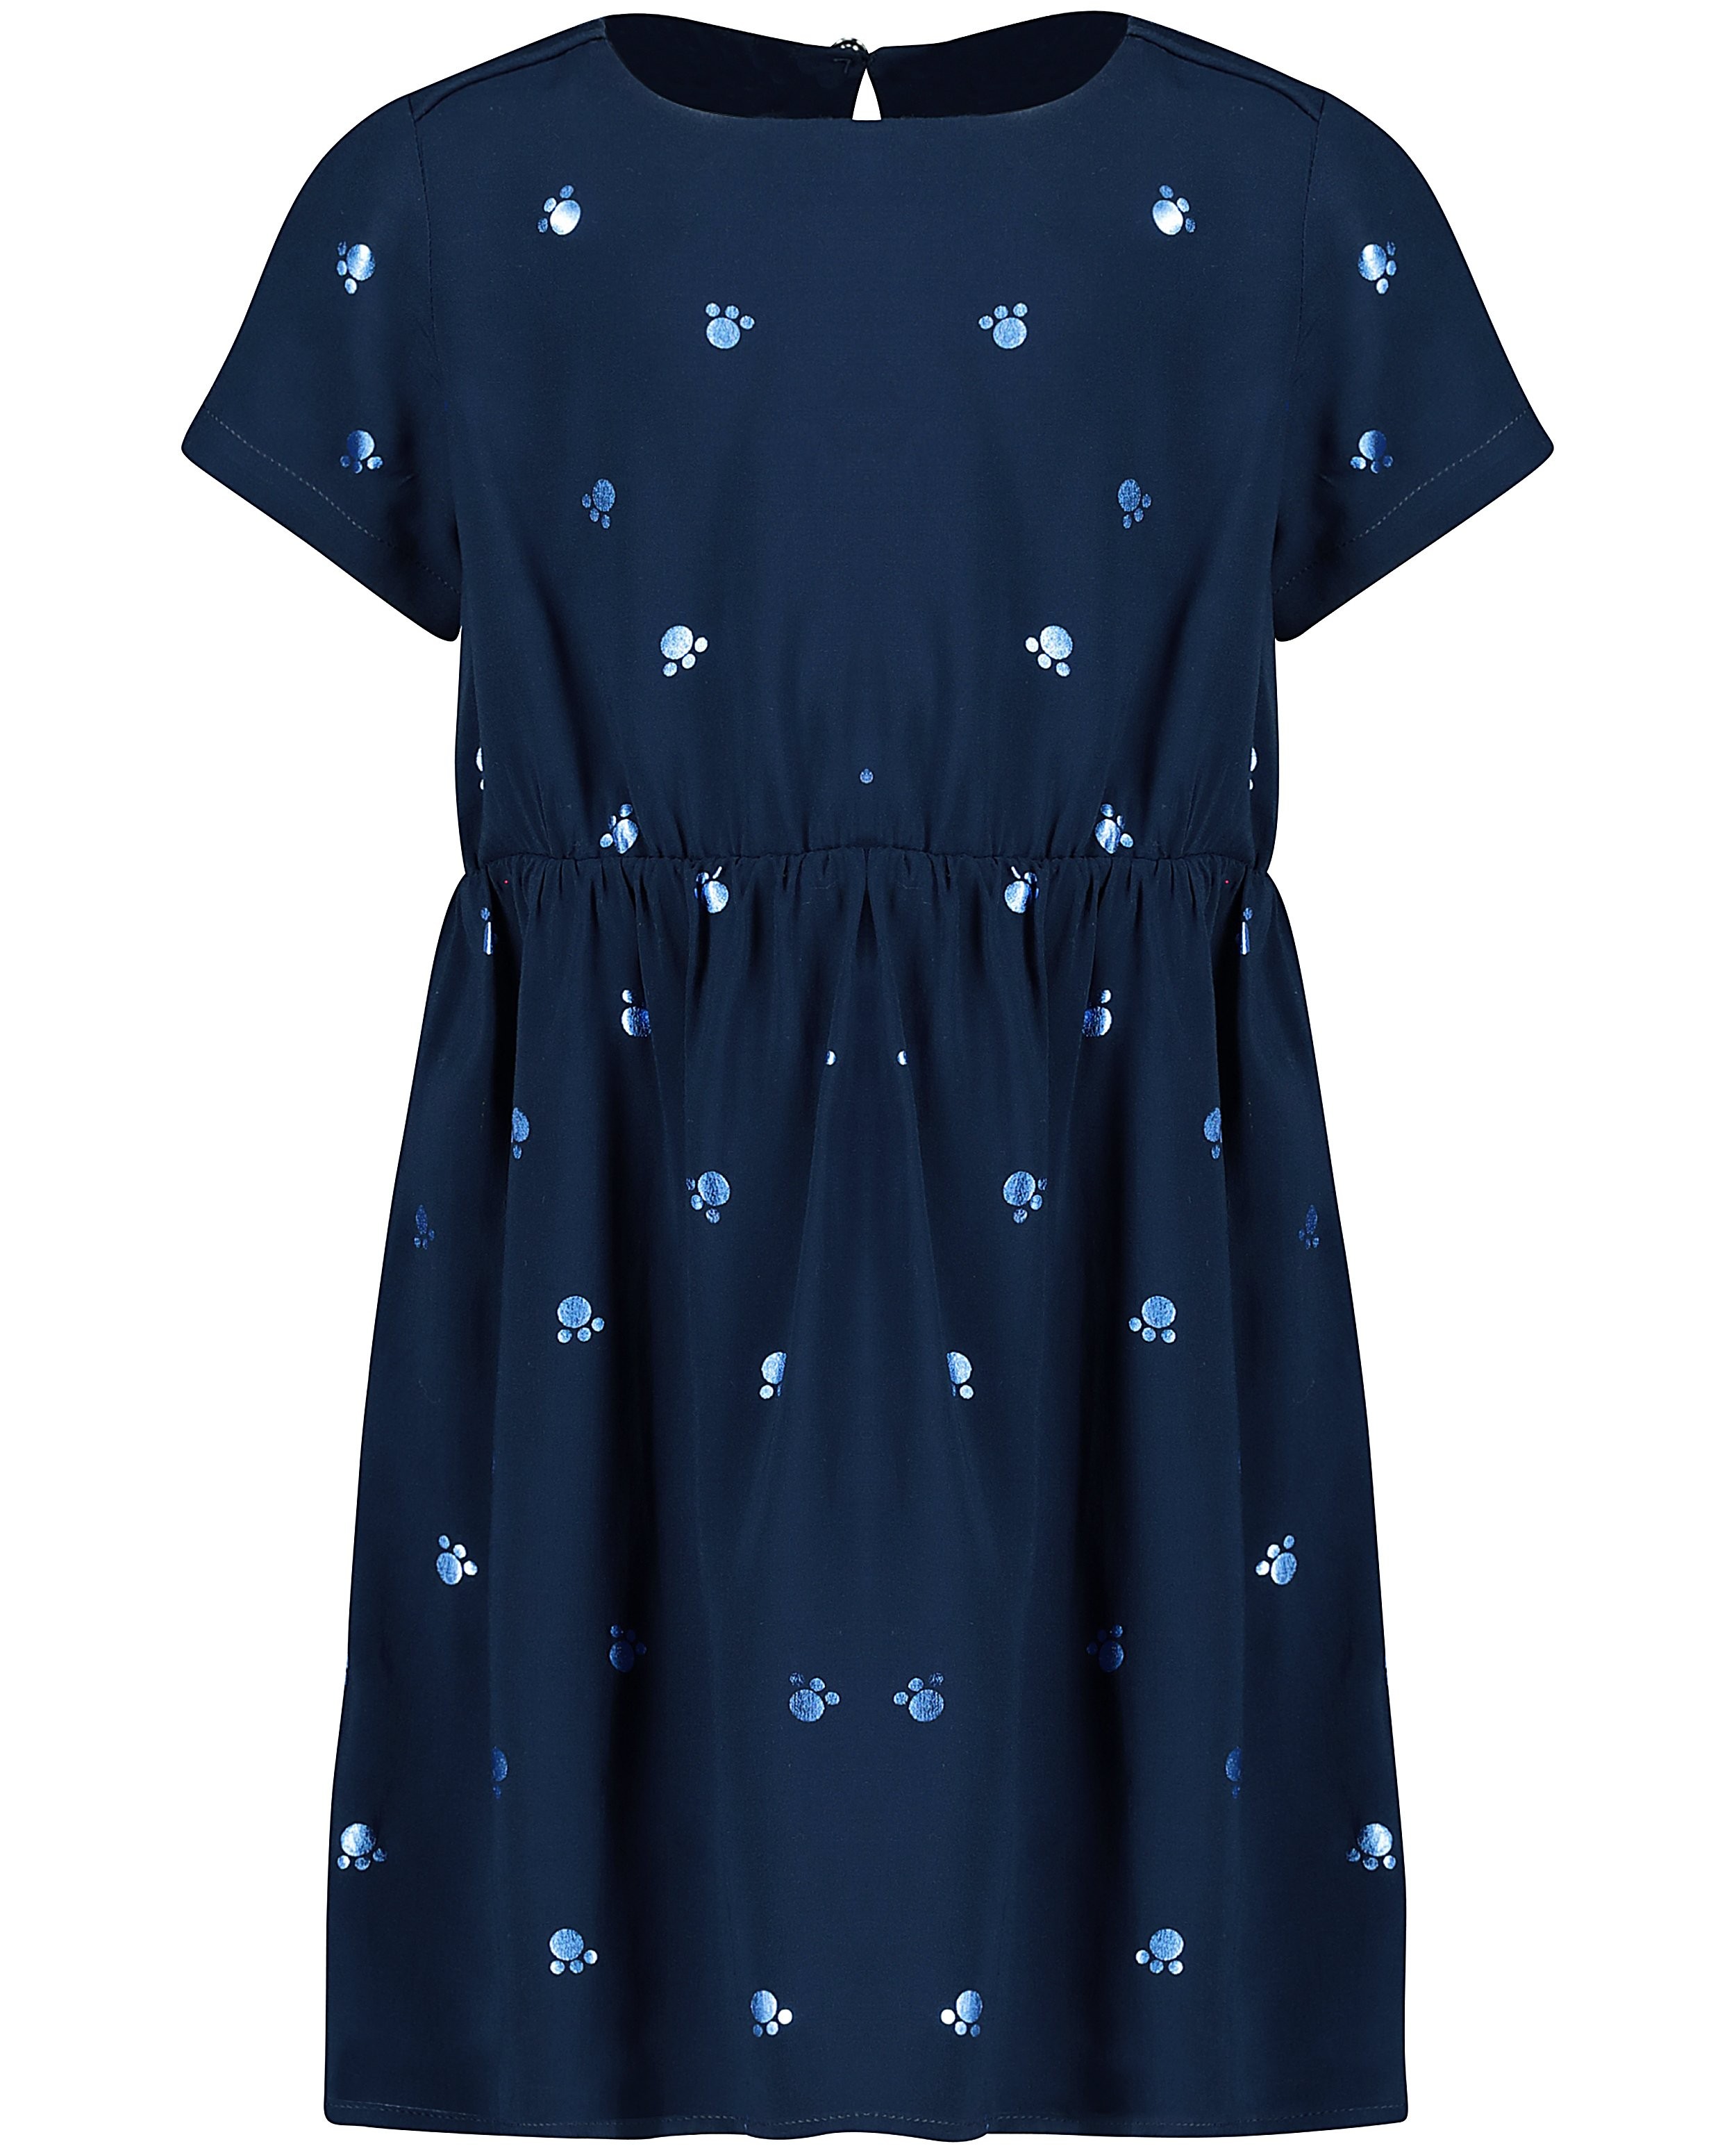 Kleedjes - Nachtblauwe viscose jurk